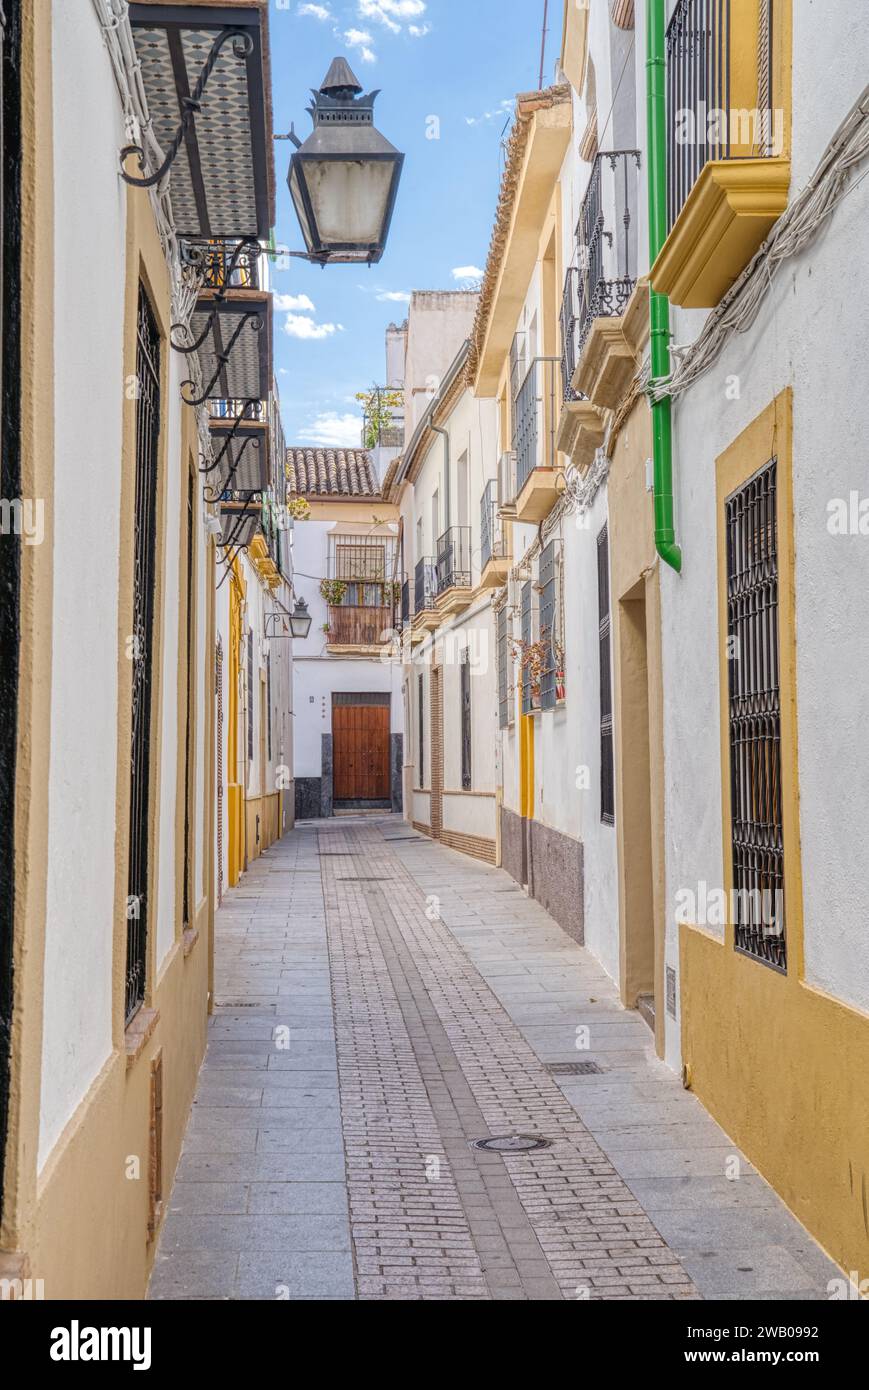 Narrow old cobblestone street in the historic city of Cordoba, Spain Stock Photo